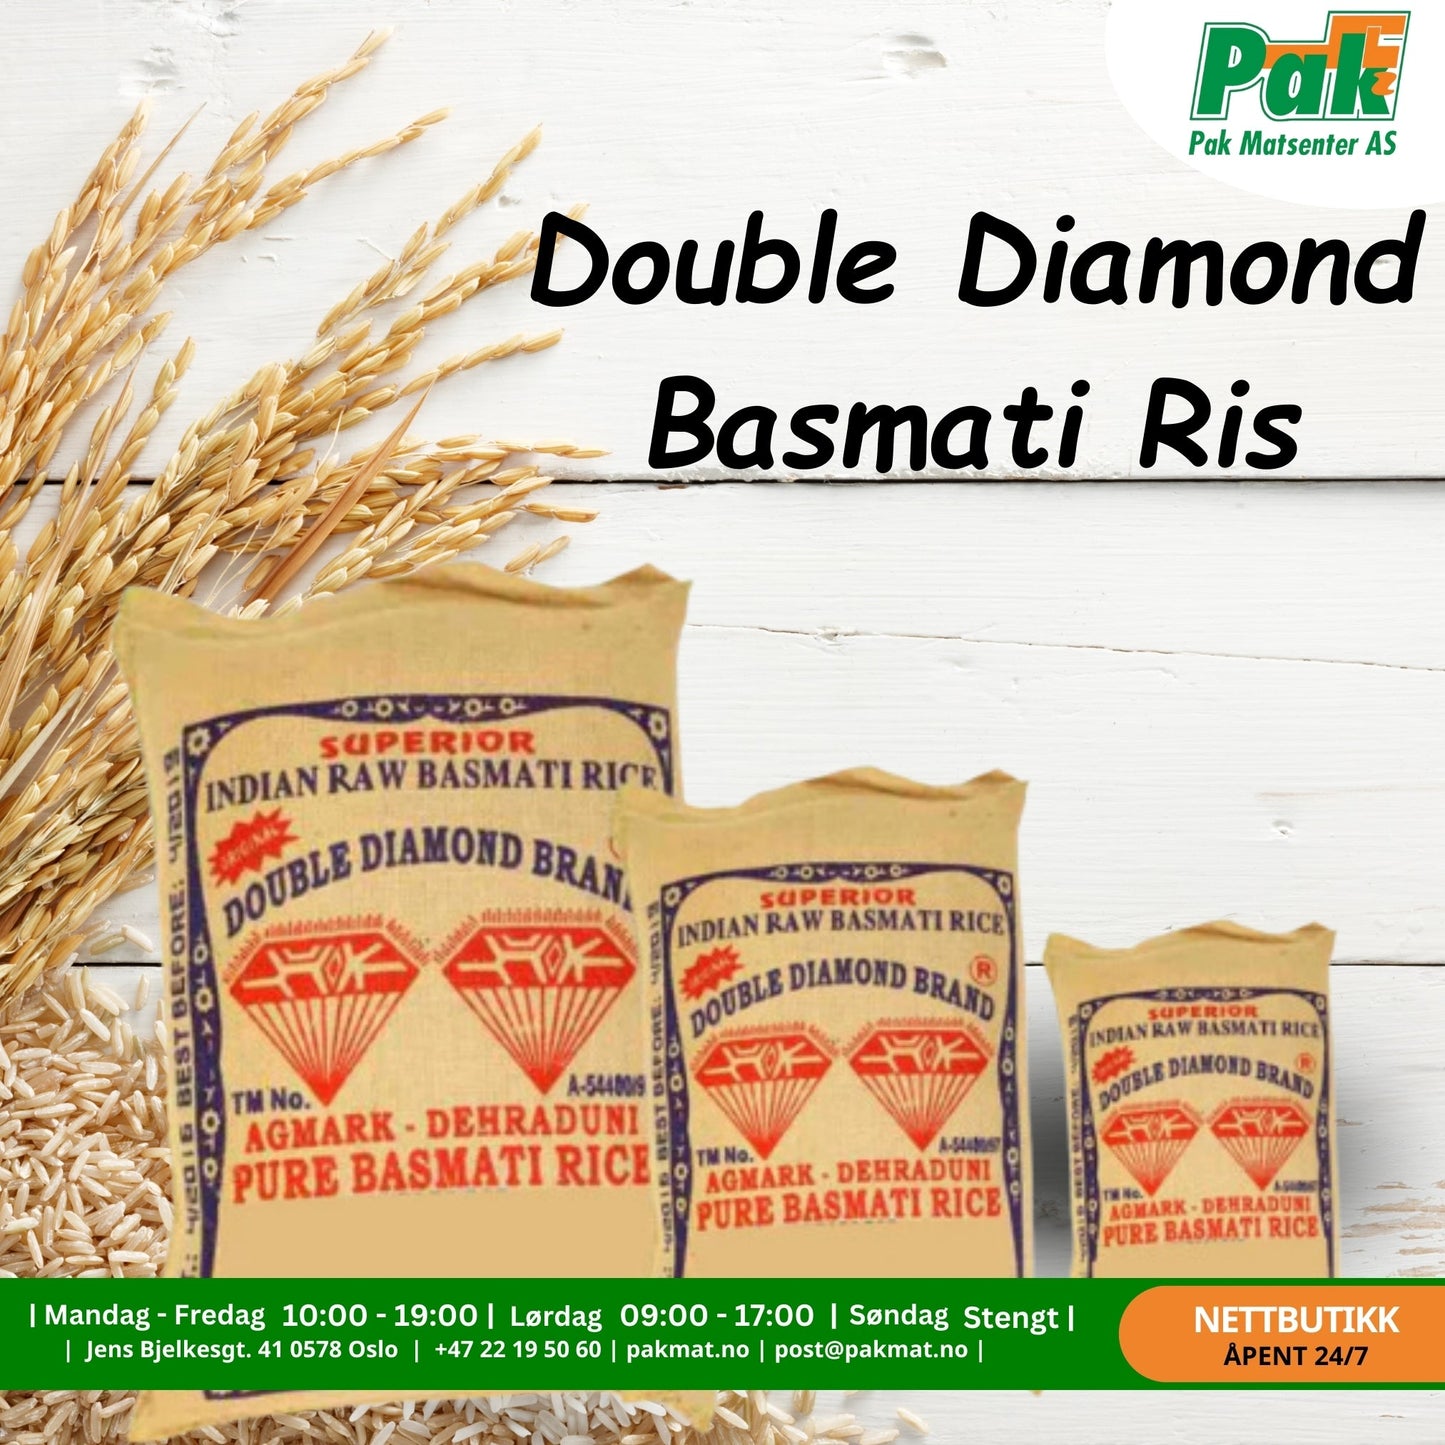 Double Diamond Basmati Ris (Chaawal) - Pakmat